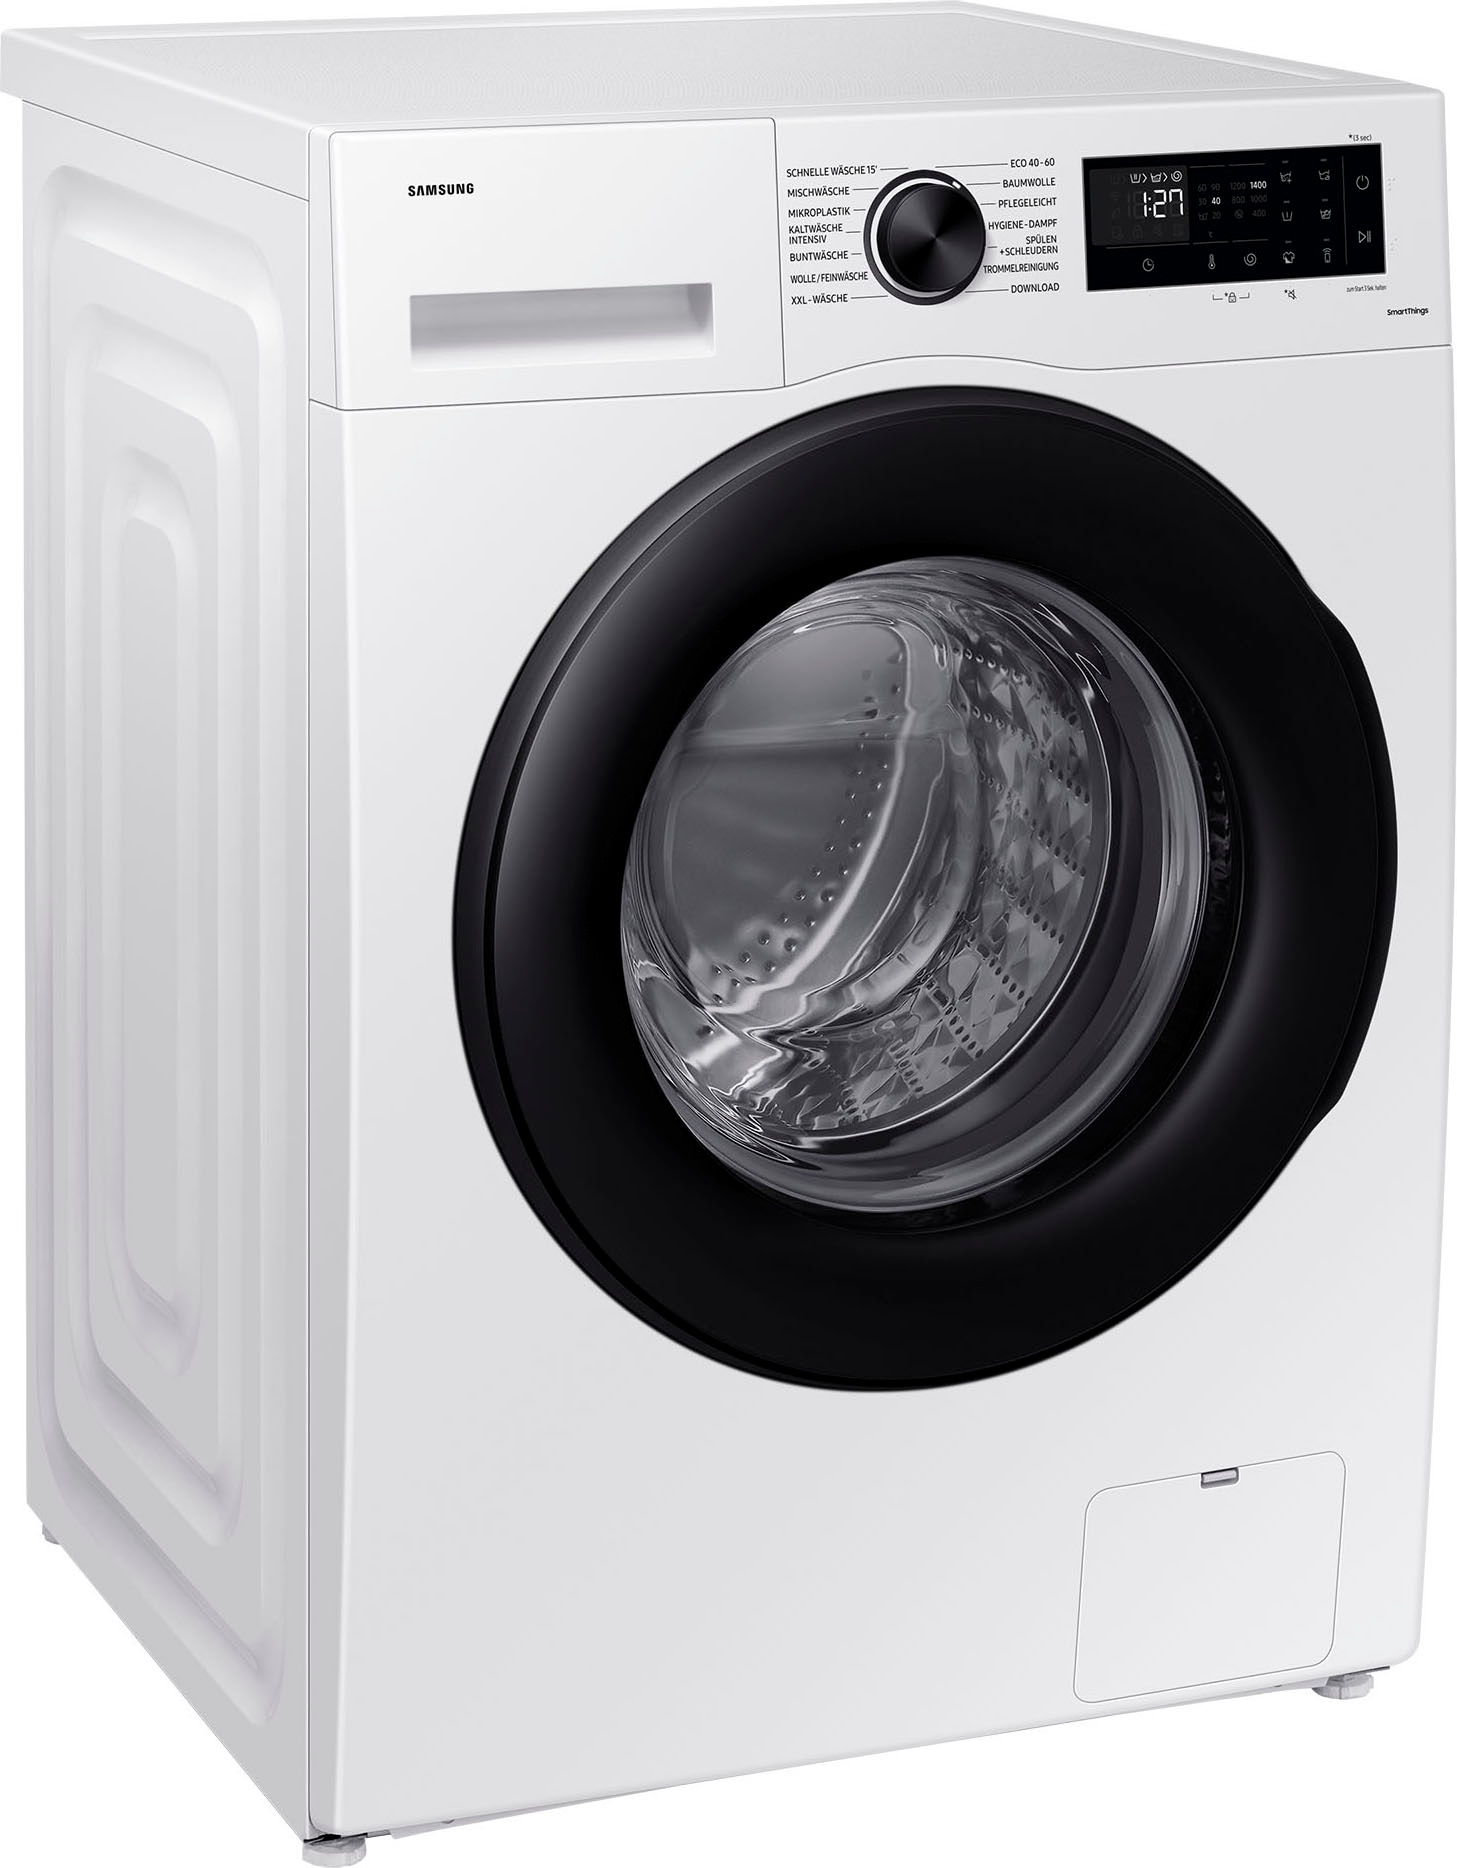 min U/ 8 3 Garantie XXL Waschmaschine mit »WW8ECGC04AAEEG«, Samsung 1400 WW5000C, WW8ECGC04AAE, Jahren kg,